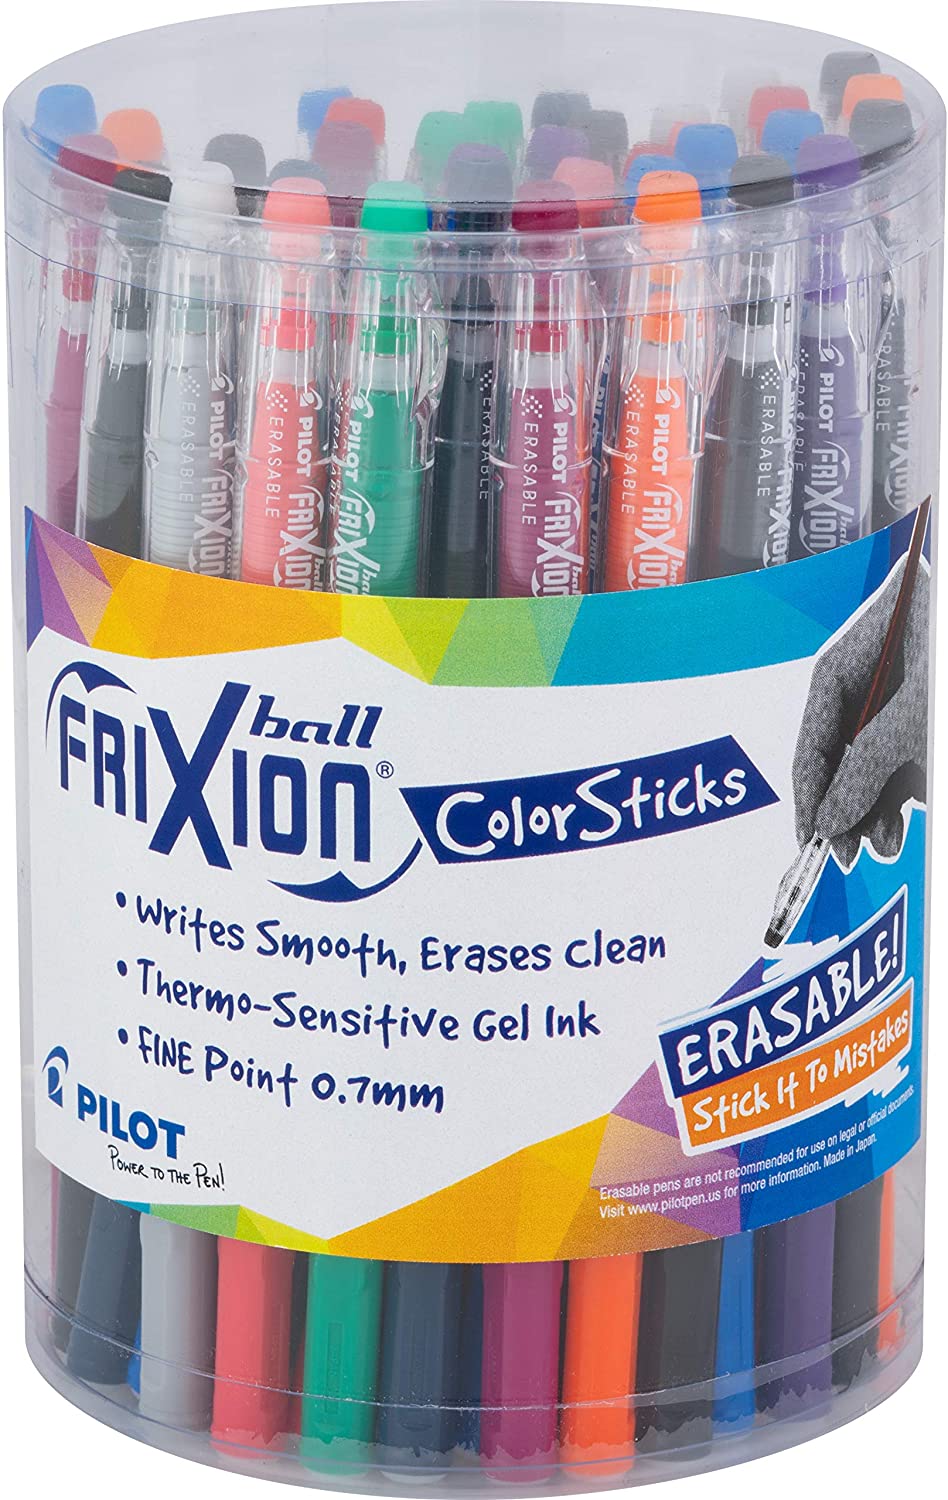 Pilot Frixion Colorstocks Erasable Gel Pen Display (23407